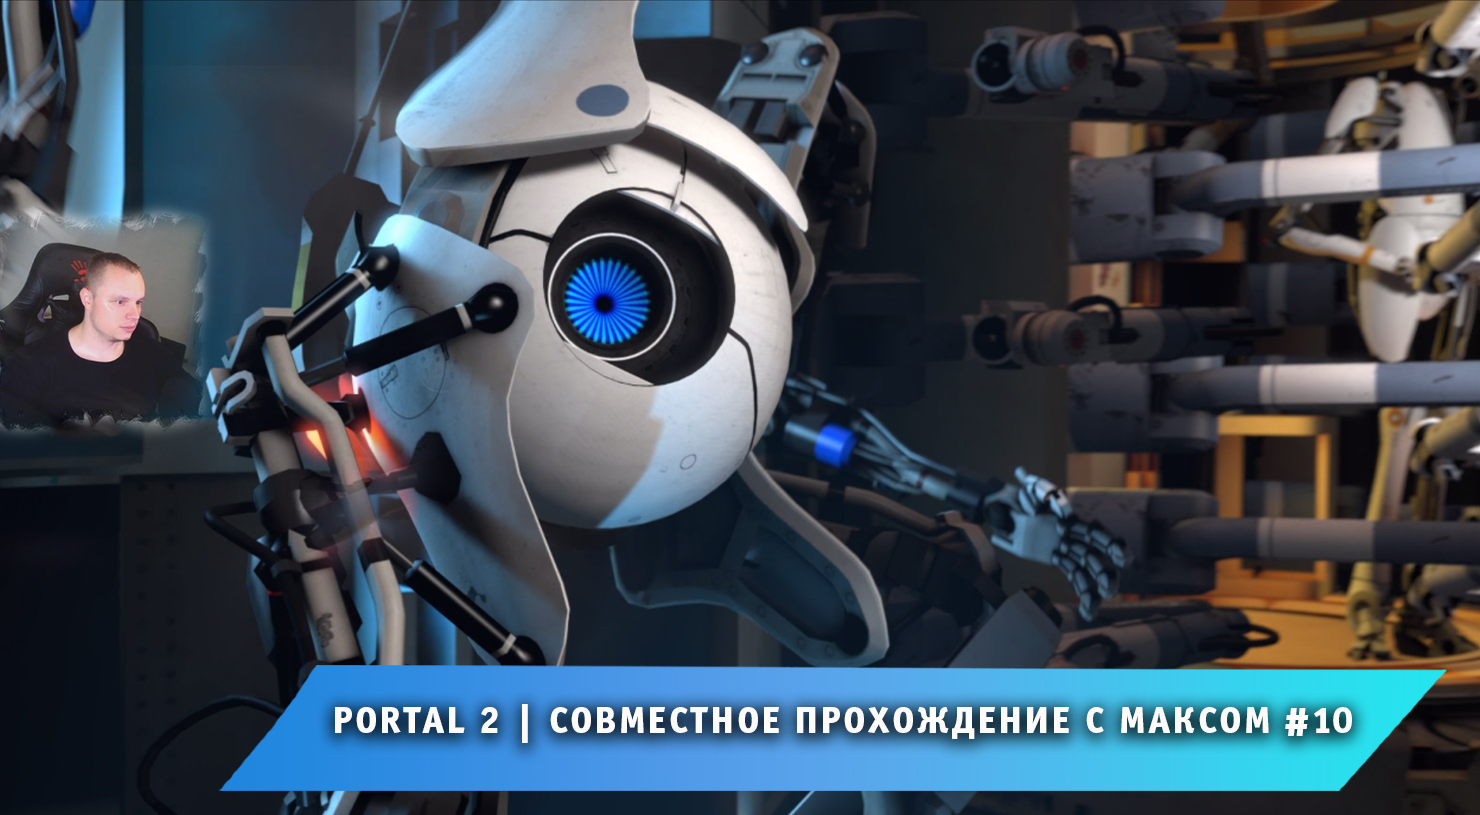 Portal 2 aperture tag торрент фото 106